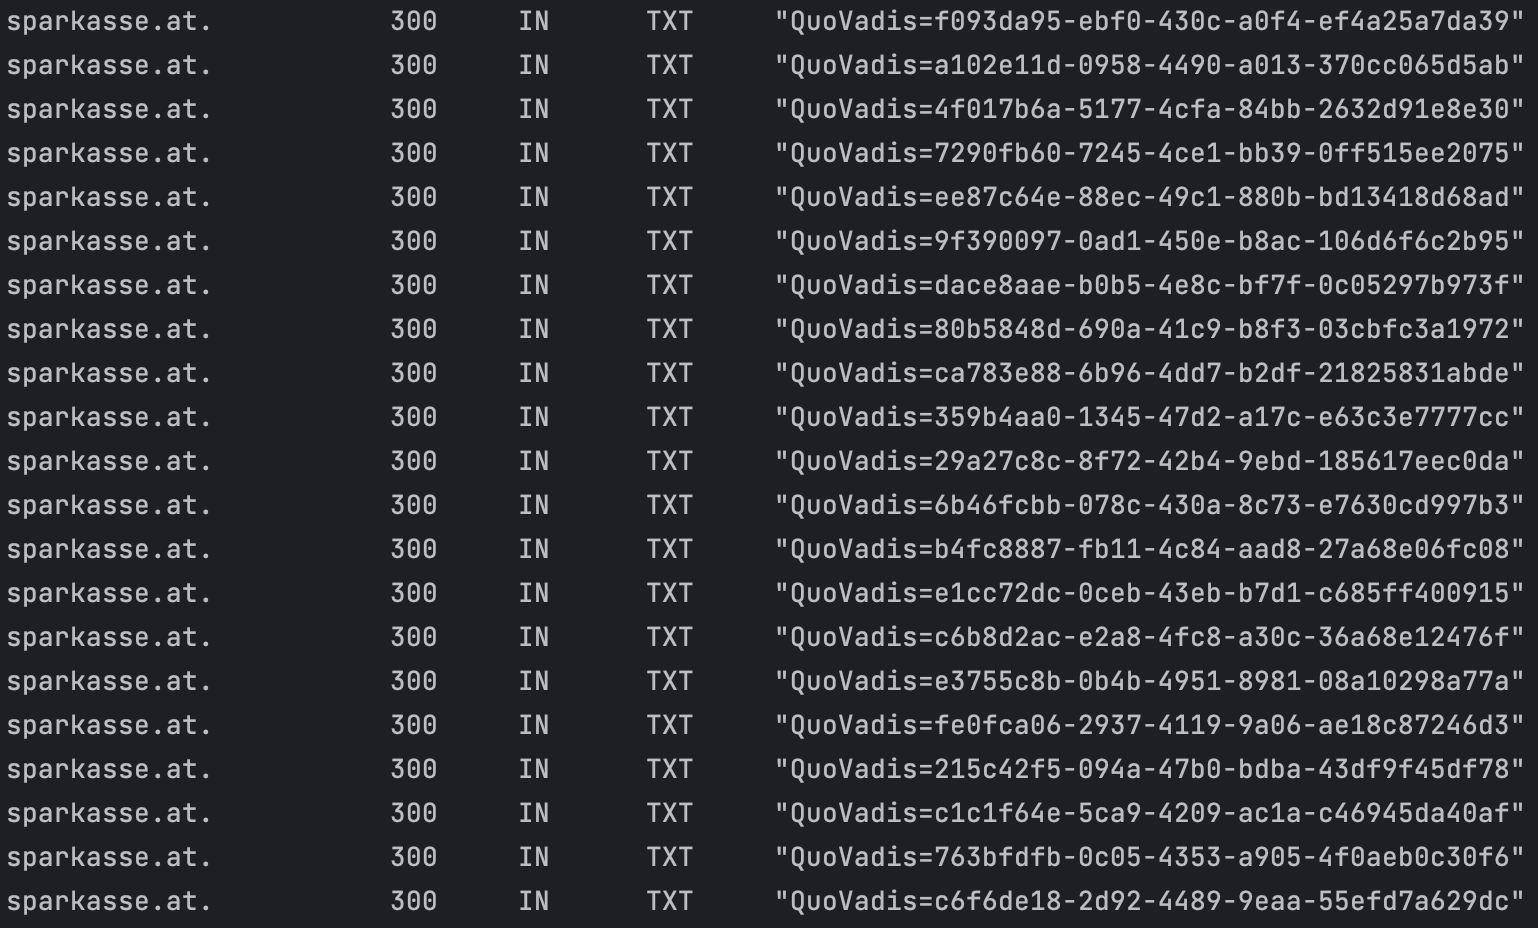 Screenshot Sparkasse DNS records